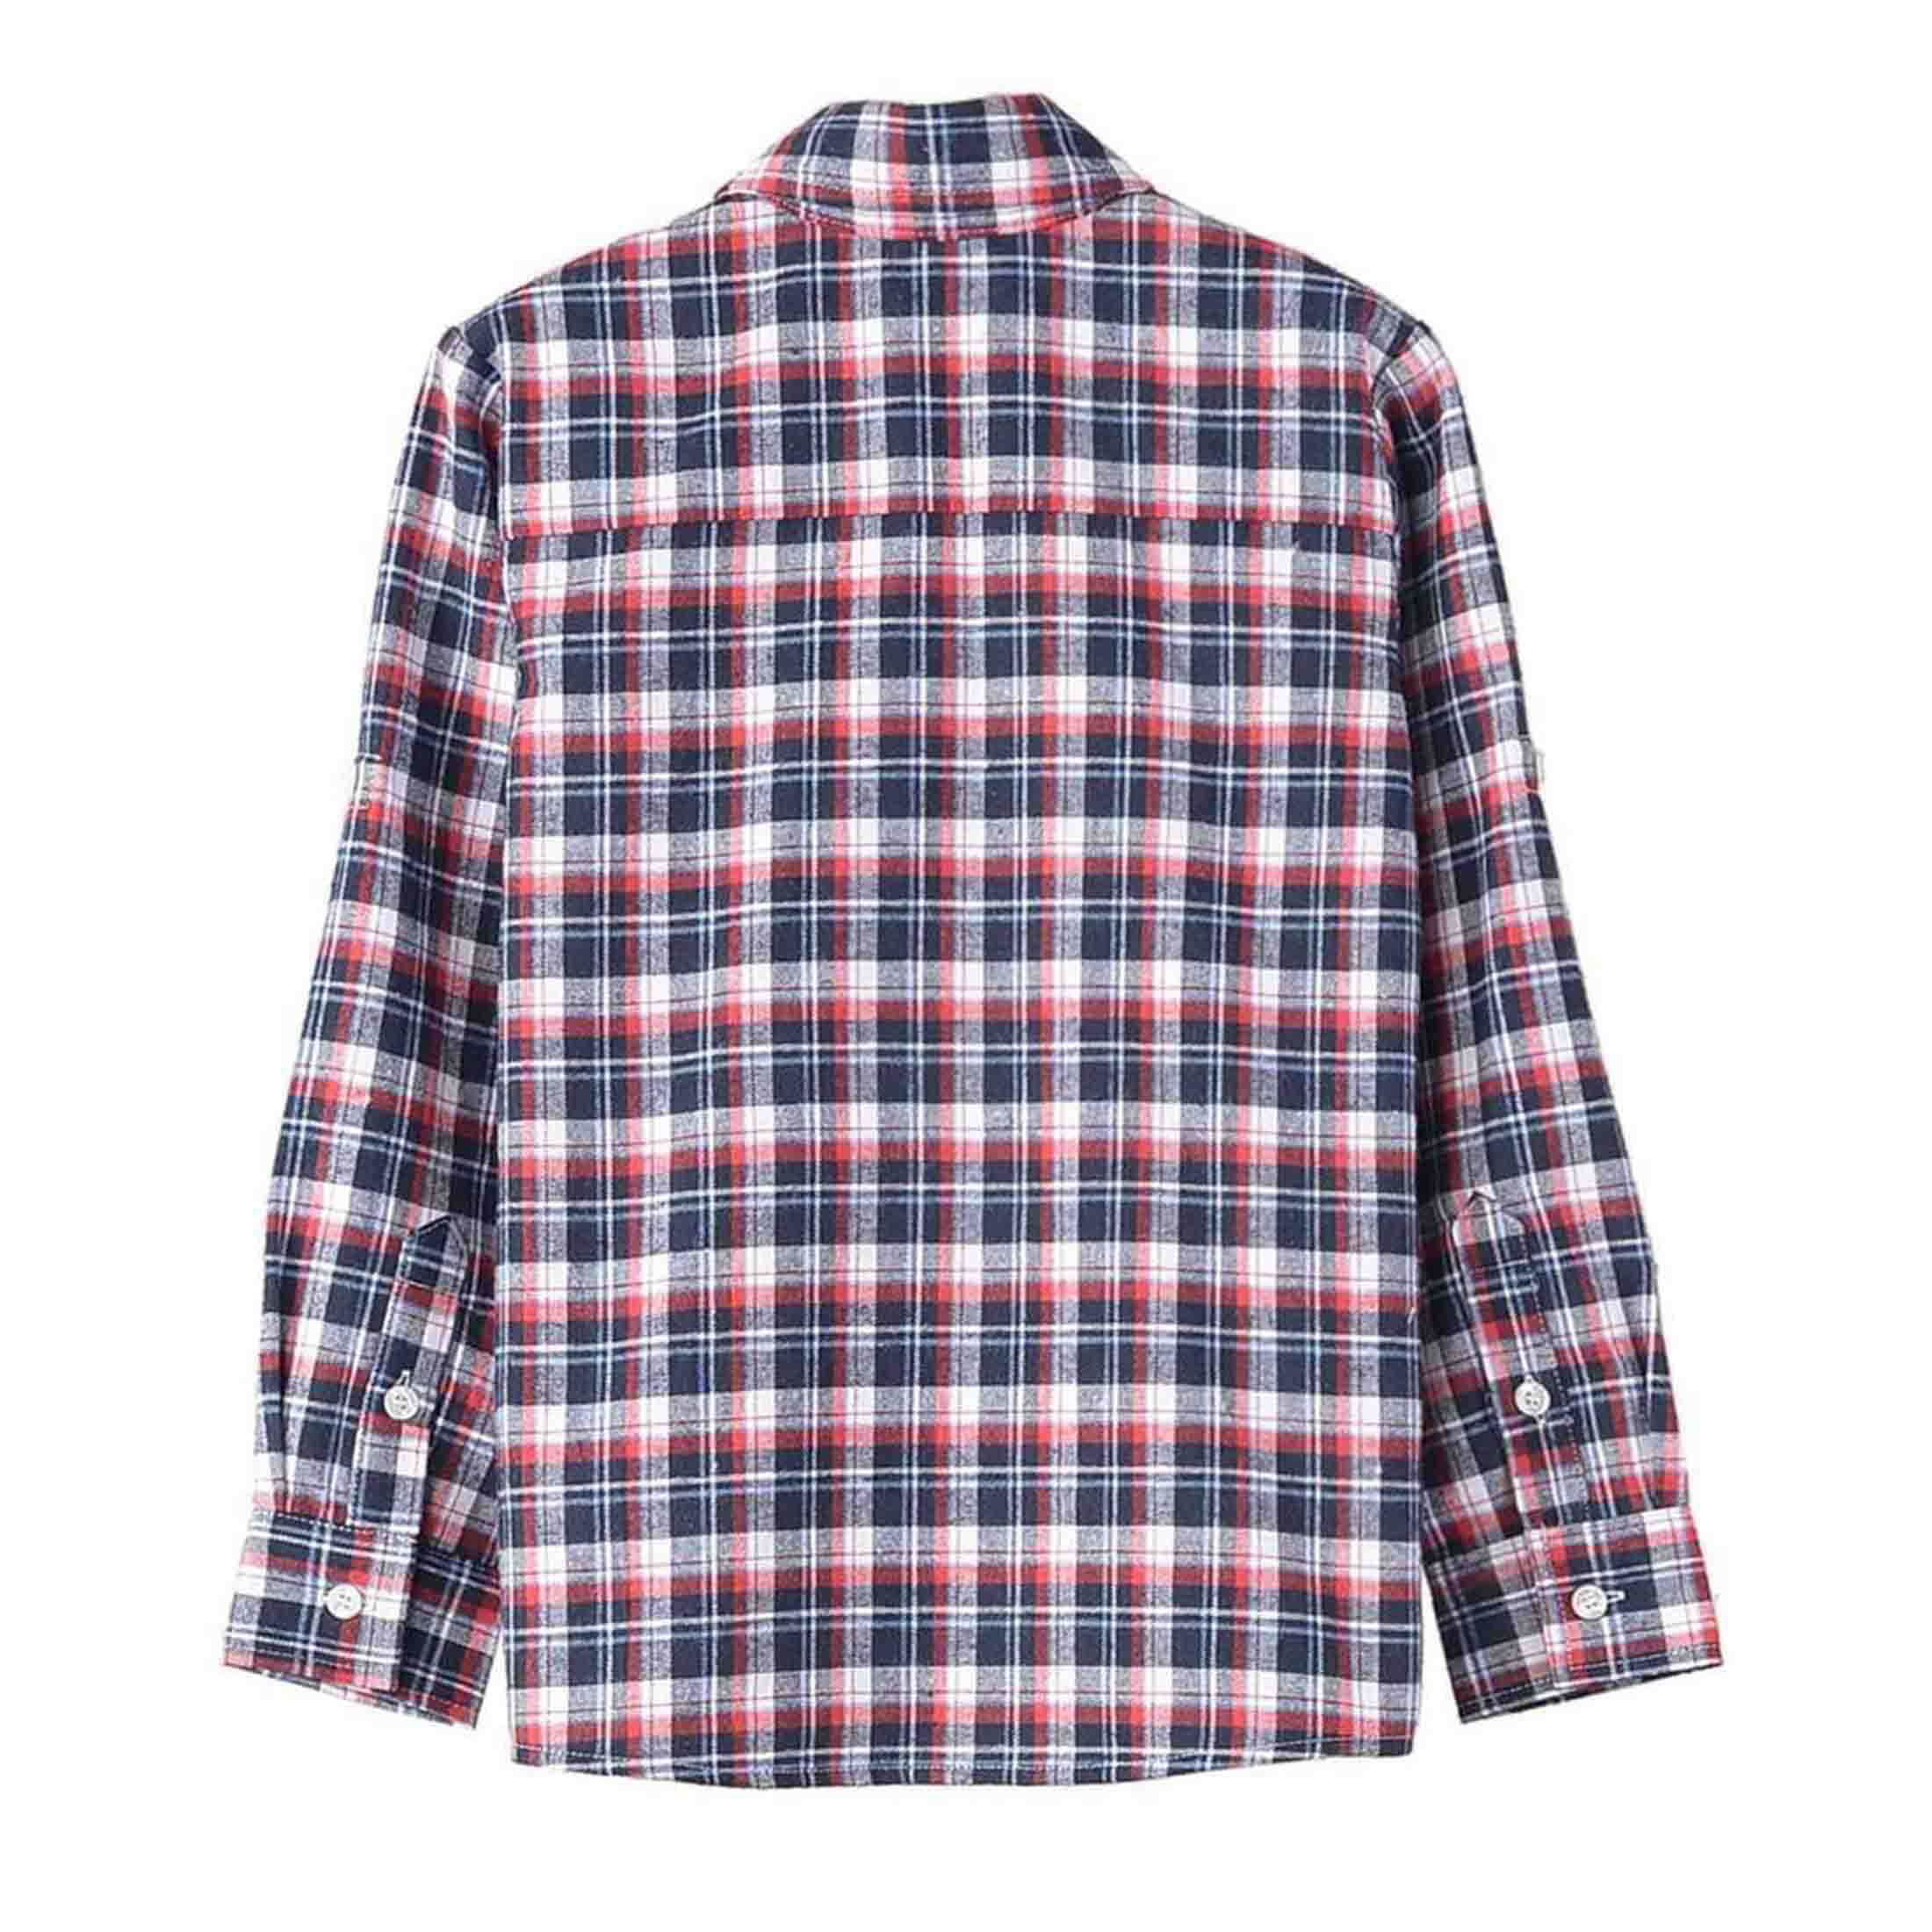 Bienzoe Boys Flannel Button Down Long Sleeve Plaid Shirt